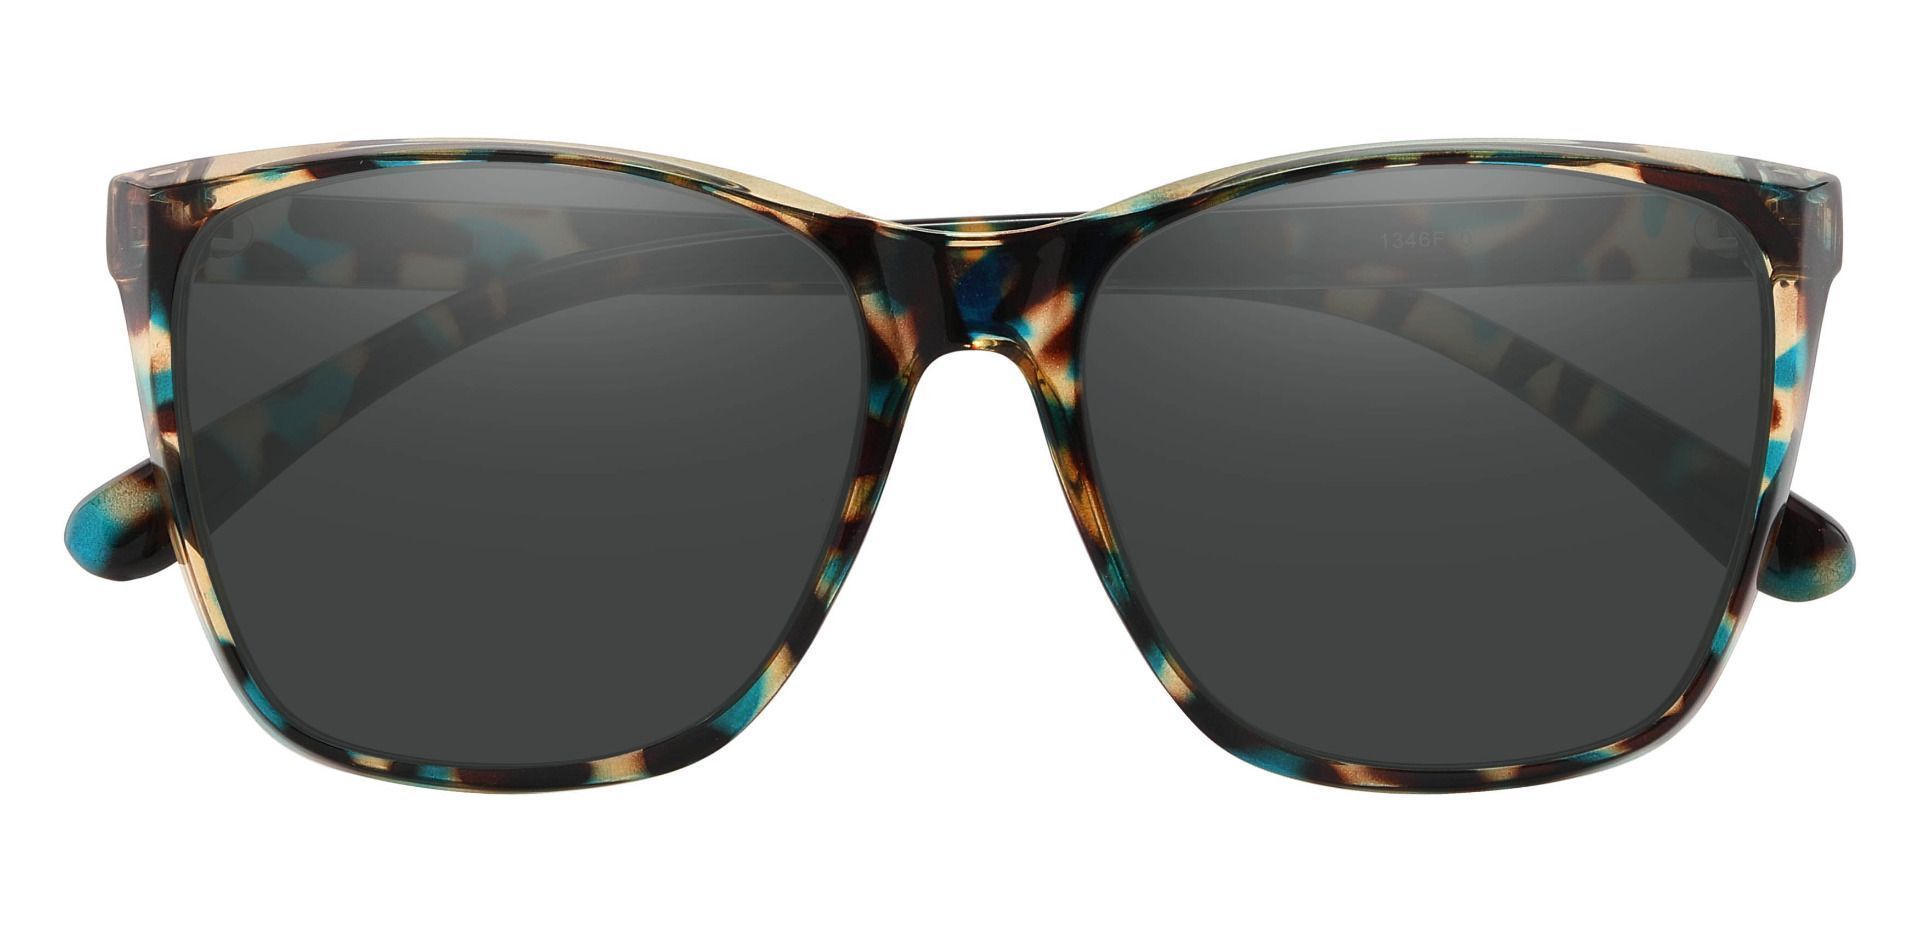 Taryn Square Prescription Sunglasses - Floral Frame With Gray Lenses